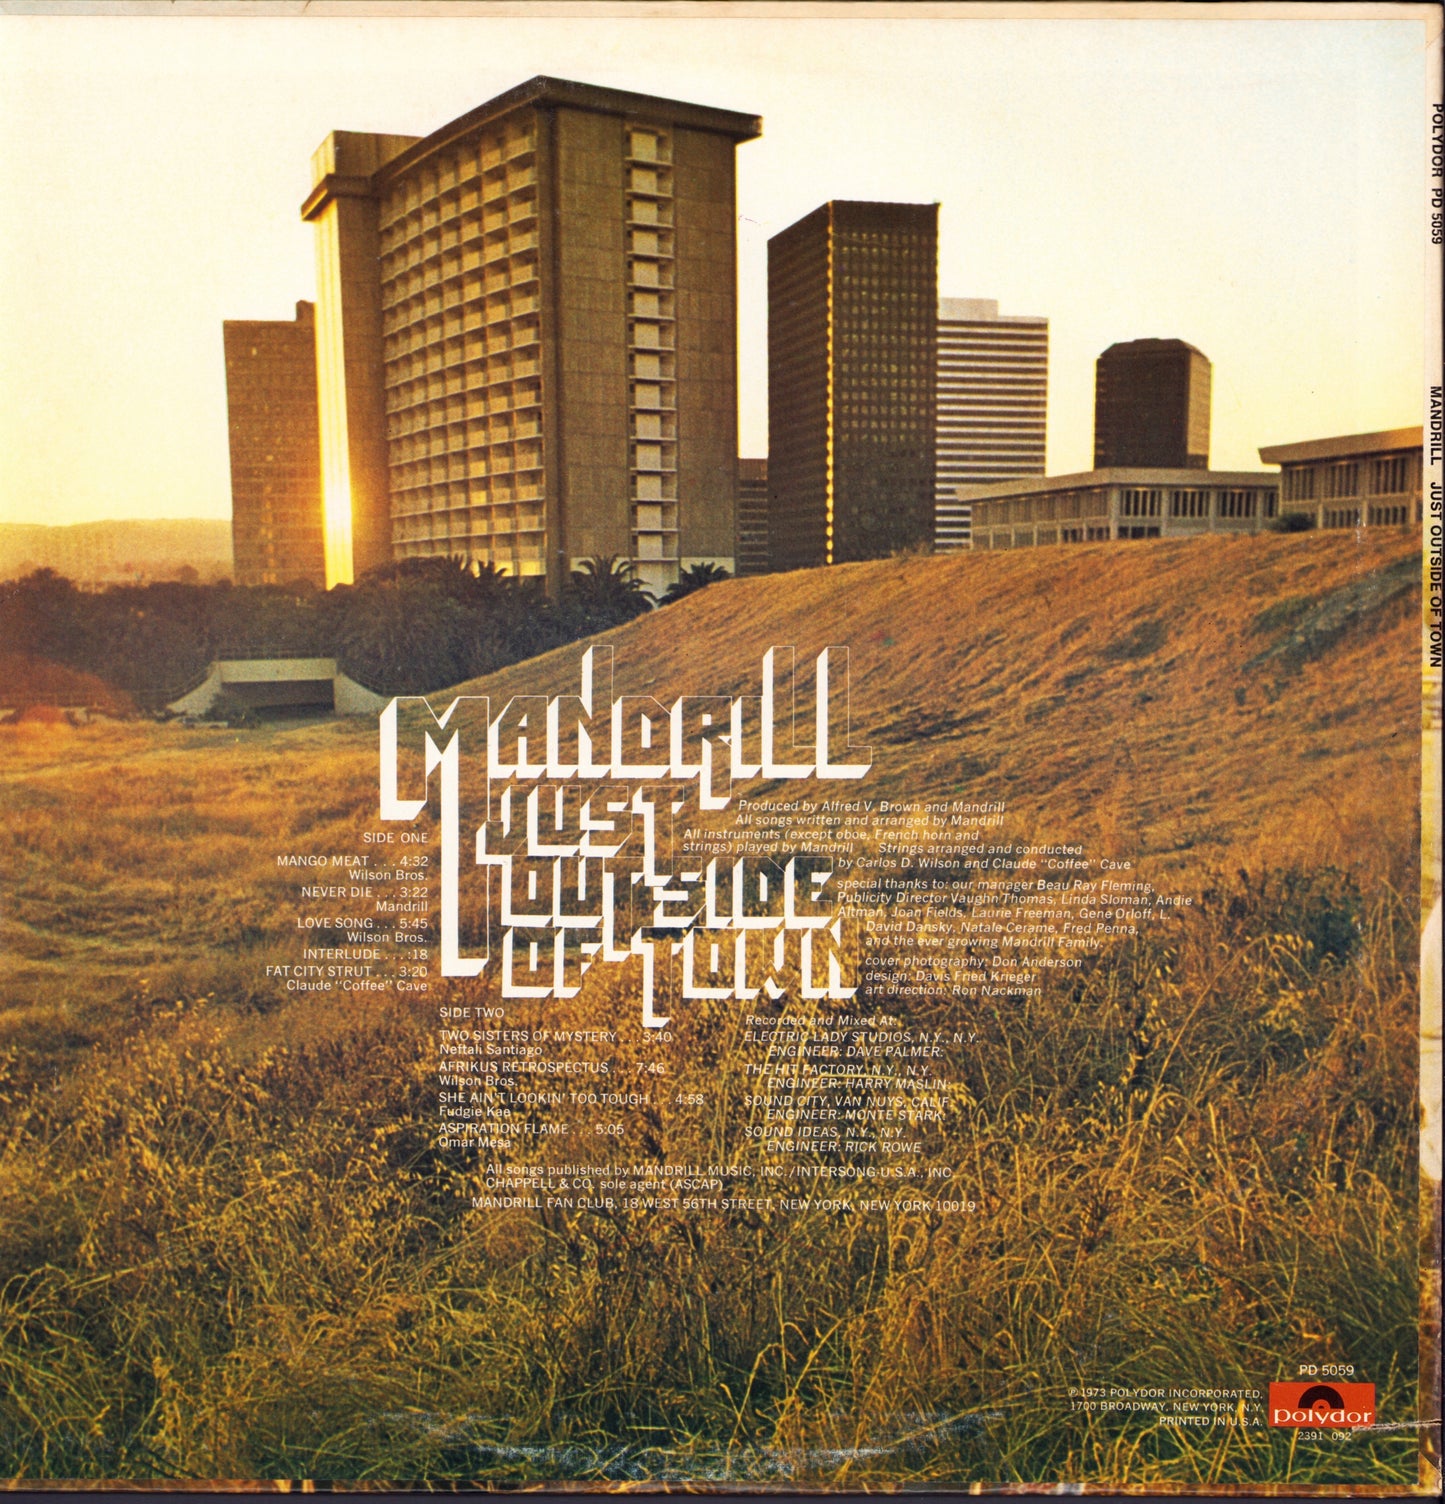 Mandrill - Just Outside Of Town Vinyl LP